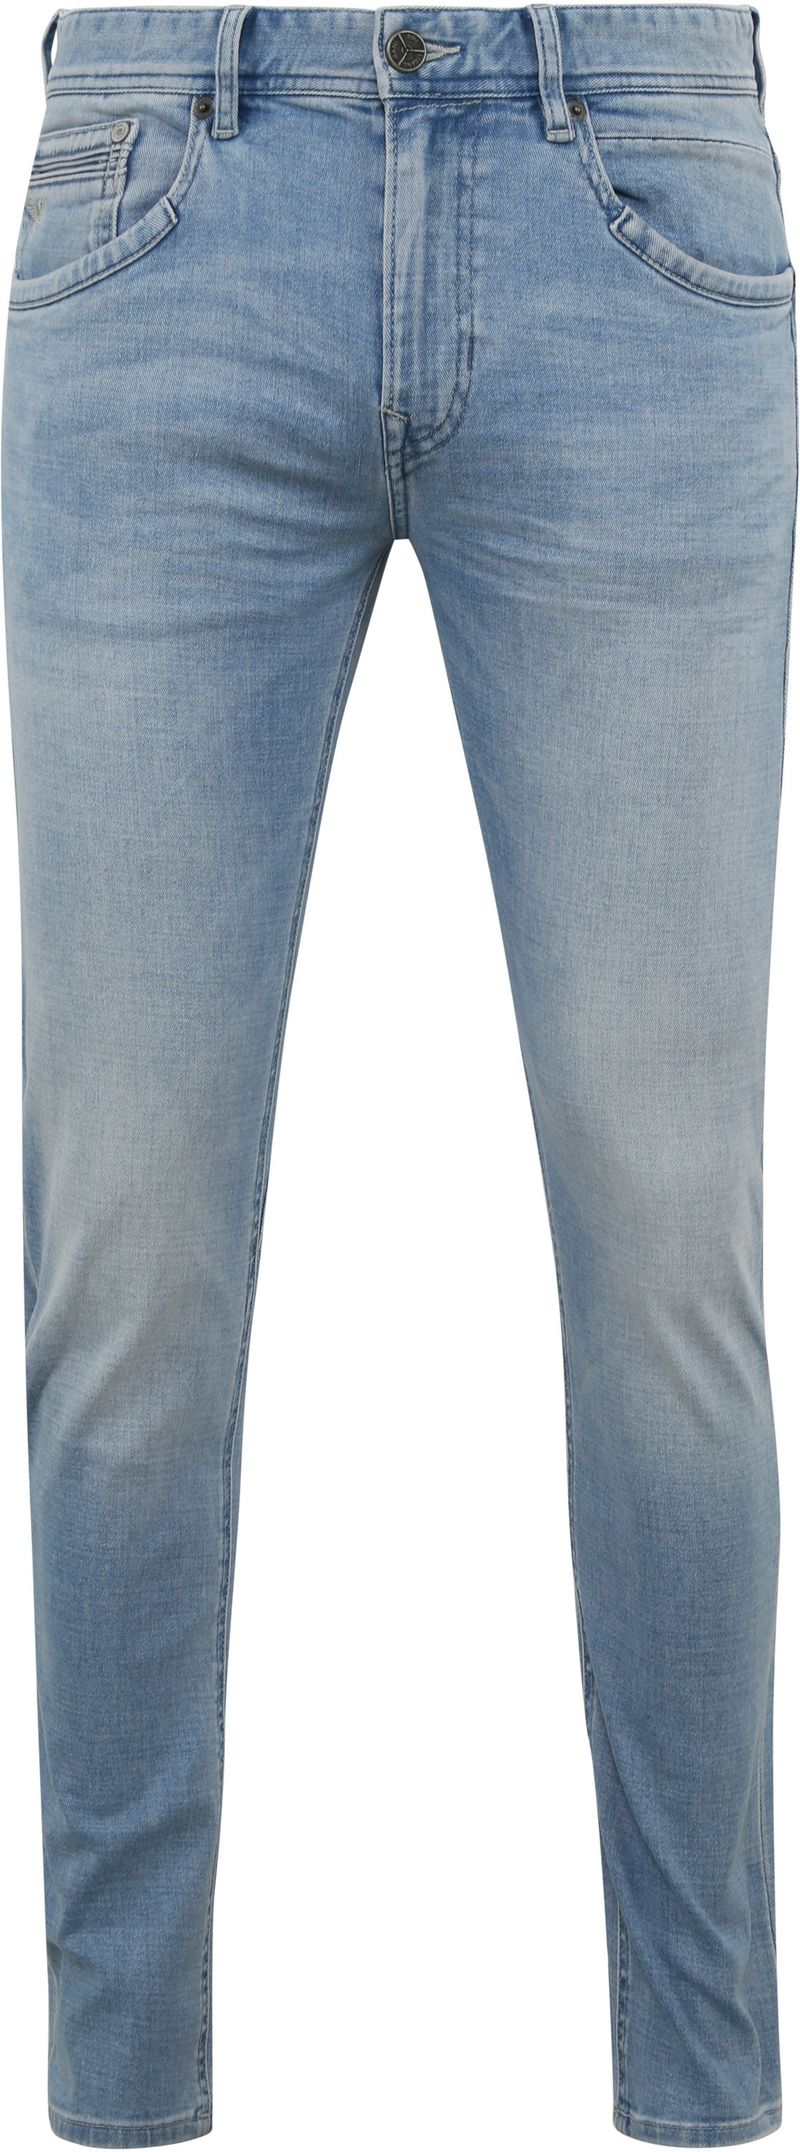 PME Legend Tailwheel Jeans Hellblau CLB - Größe W 35 - L 32 von PME Legend